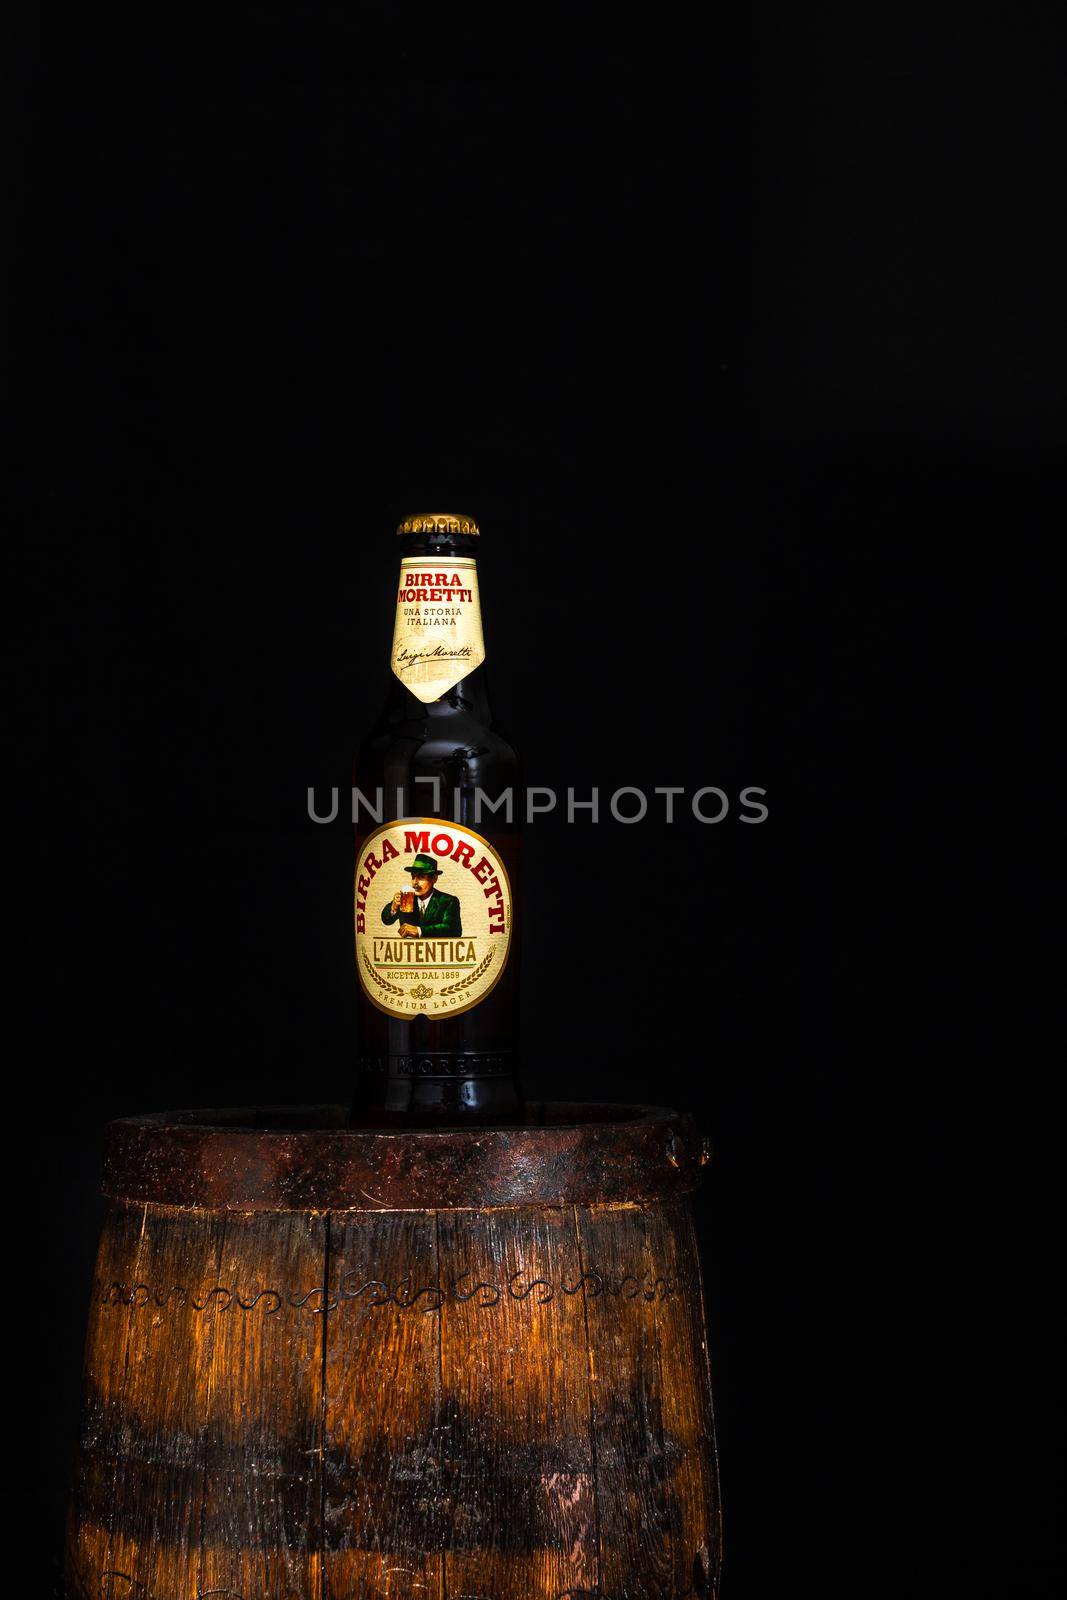 Bottle of Birra Moretti beer on wooden barrel with dark background. Illustrative editorial photo Bucharest, Romania, 2021